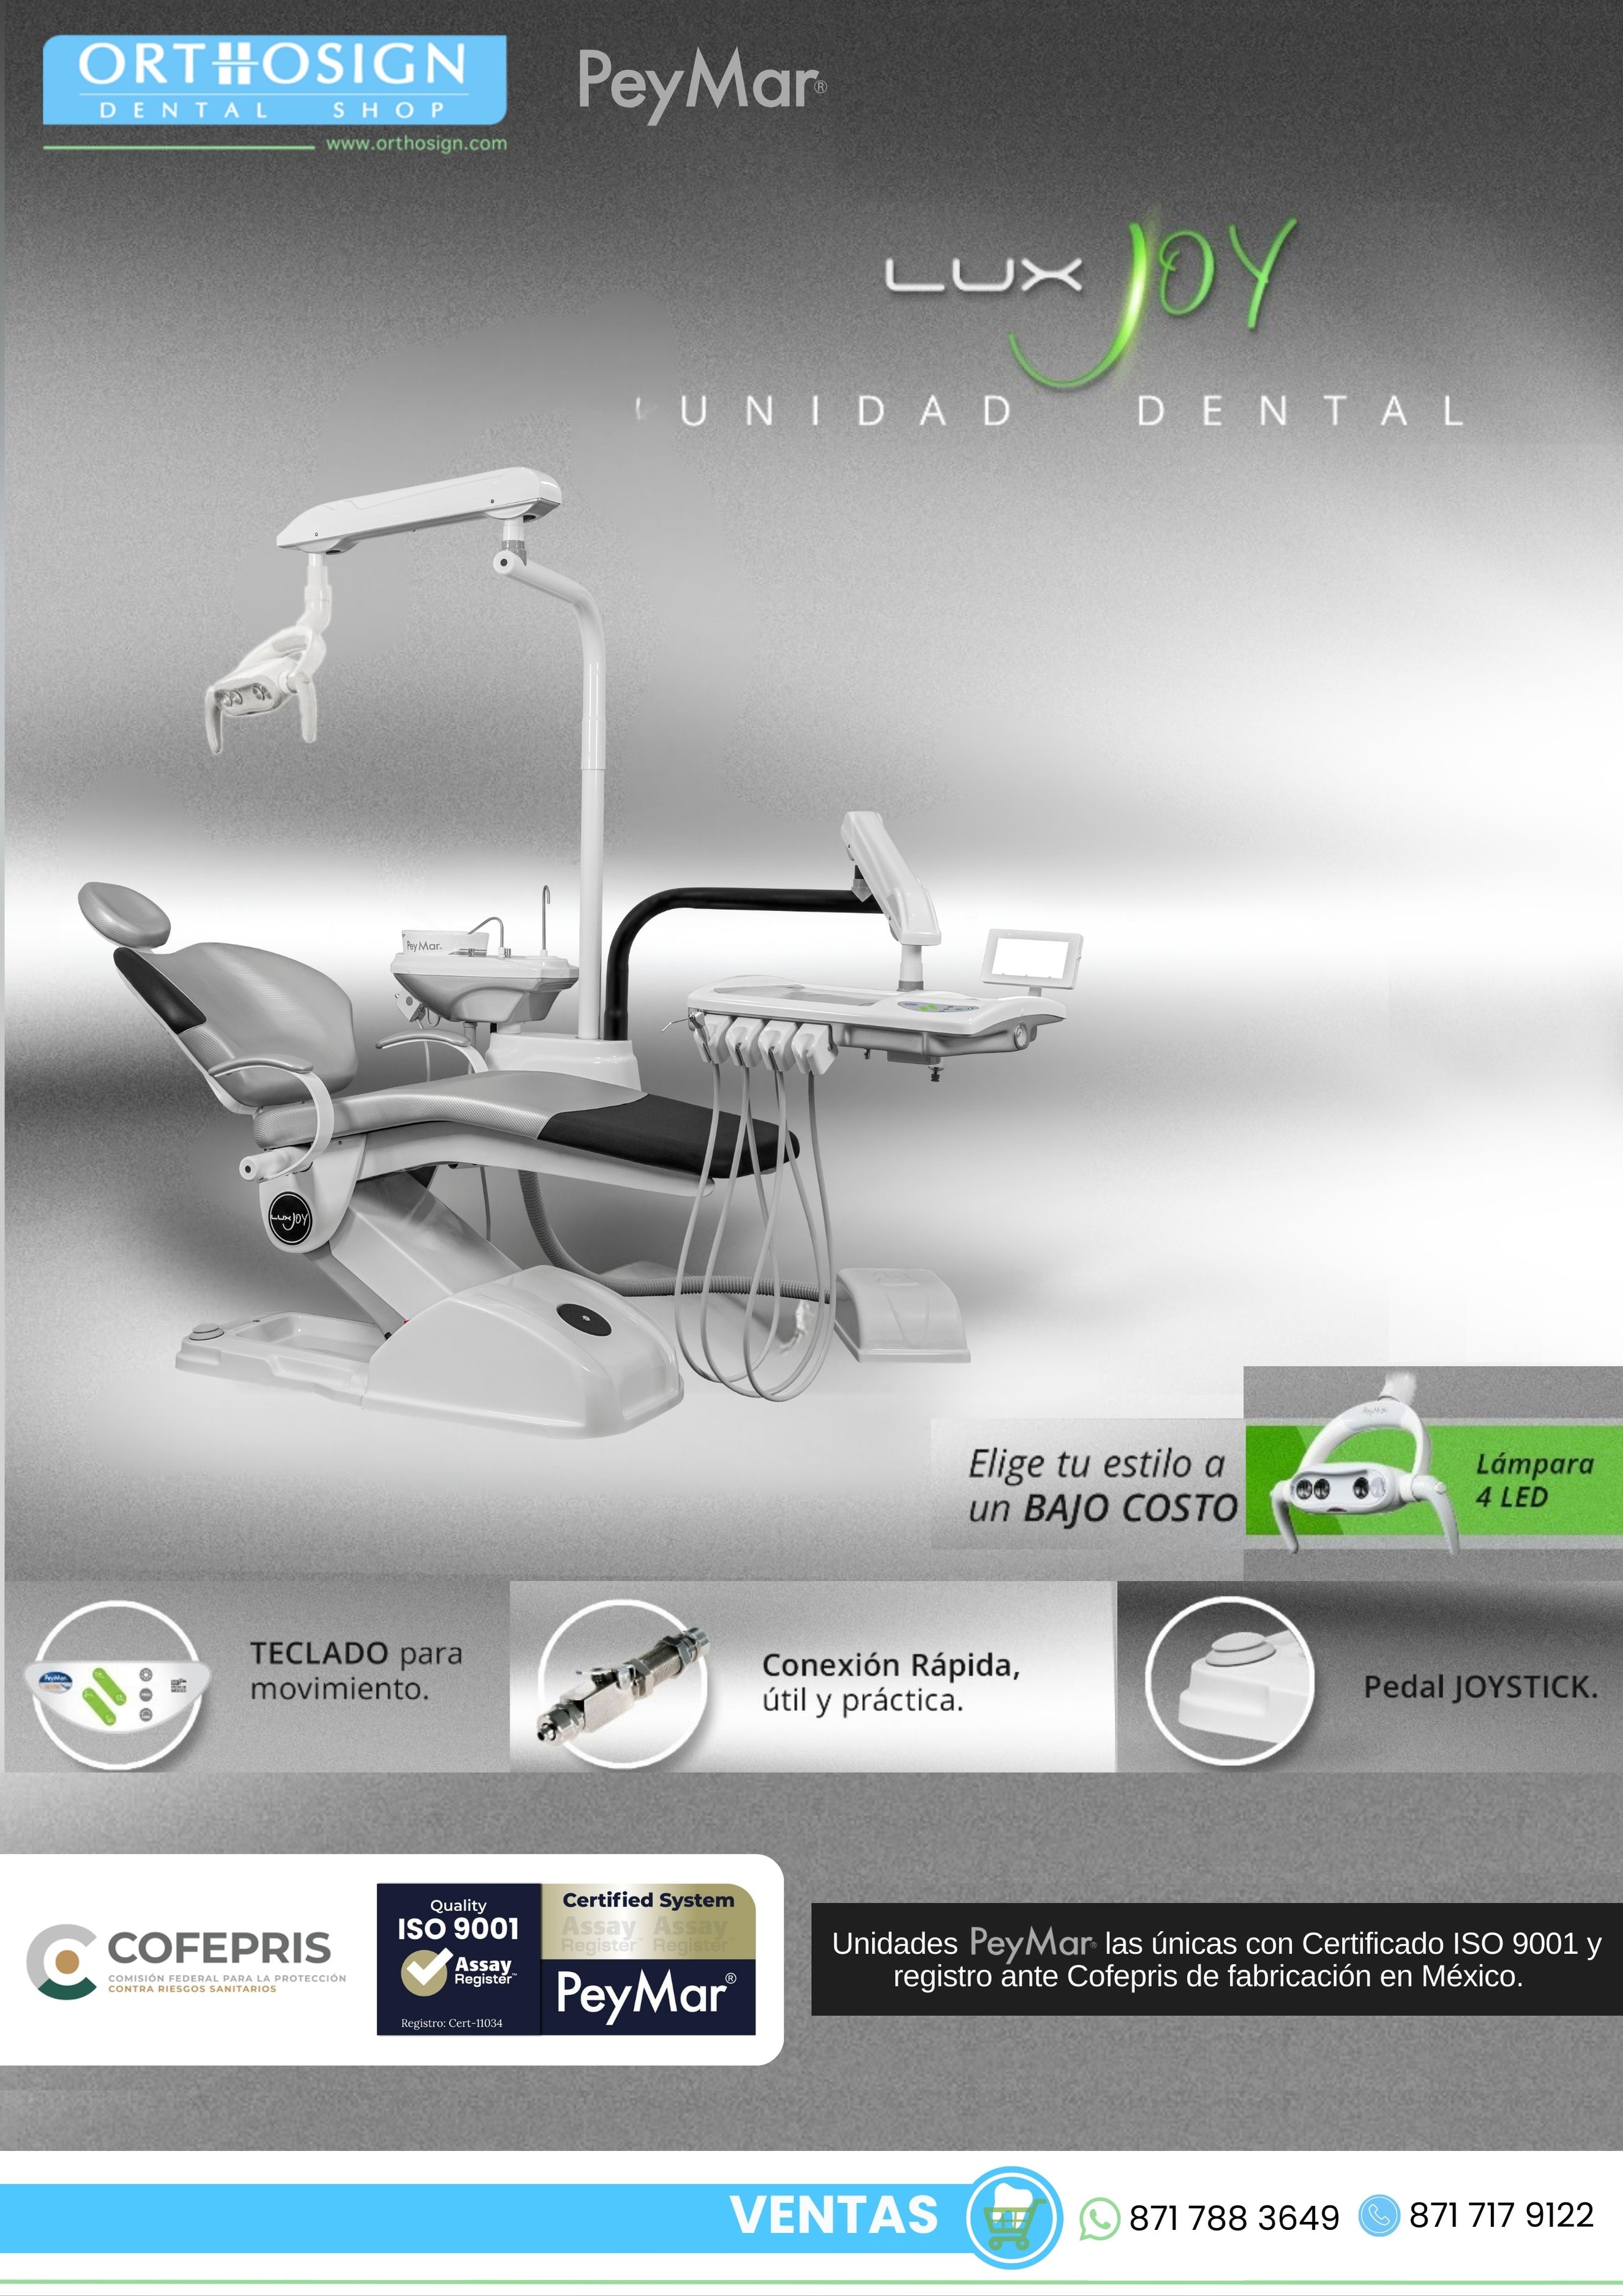 Unidad Dental Lux Joy 2022  Peymar - Catálogo